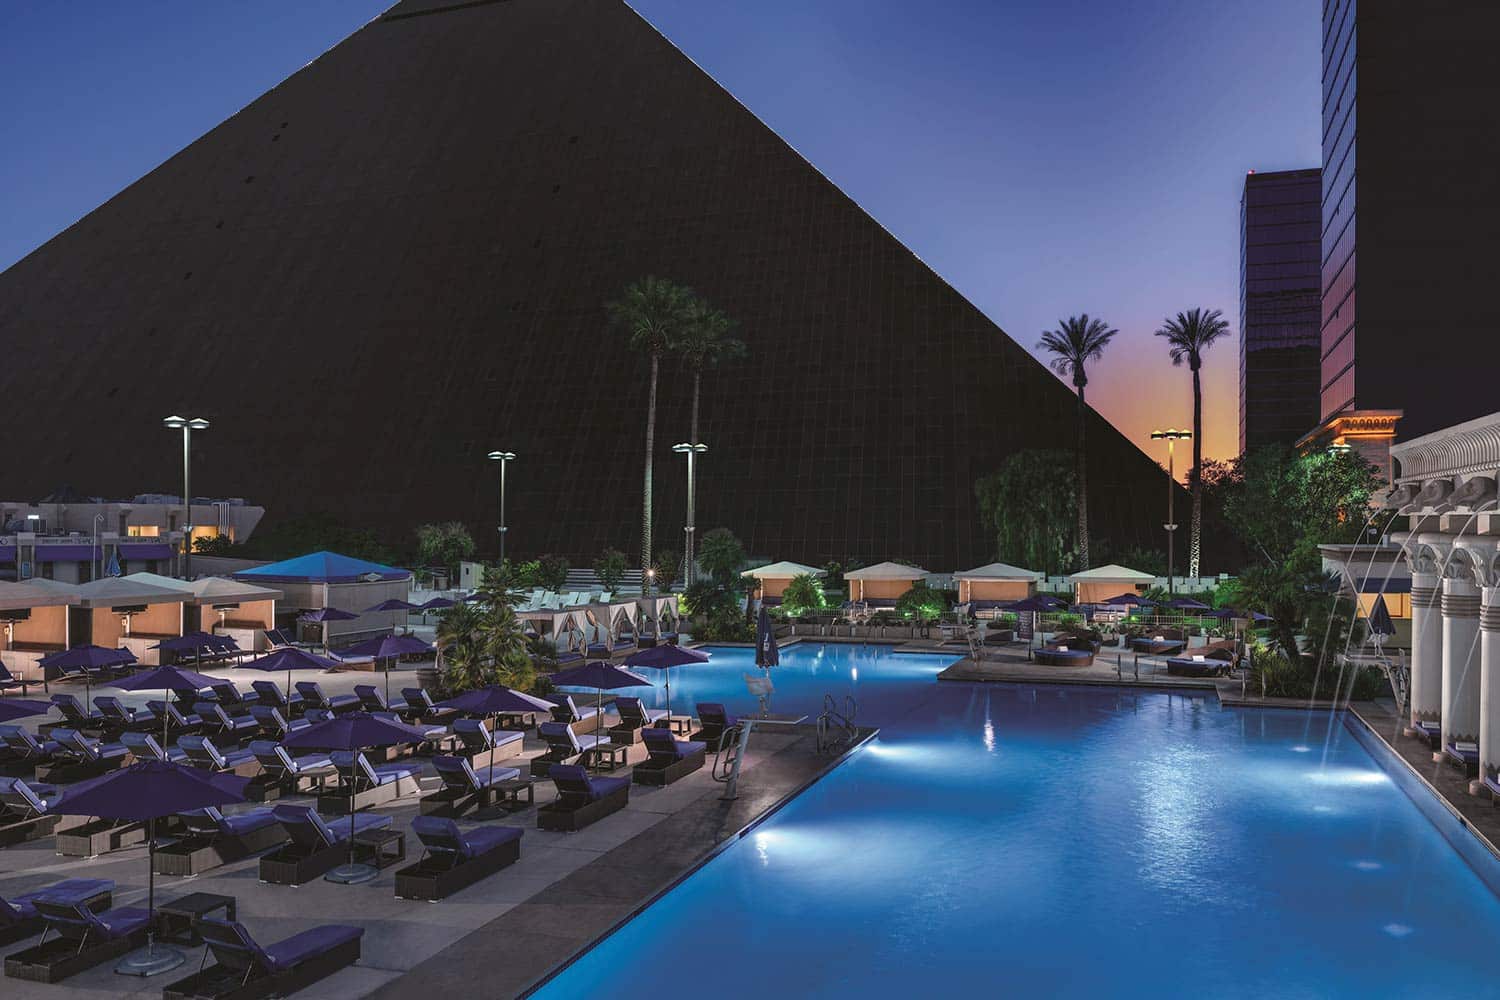 Luxor Hotel & Casino, Las Vegas - Book Tickets & Tours